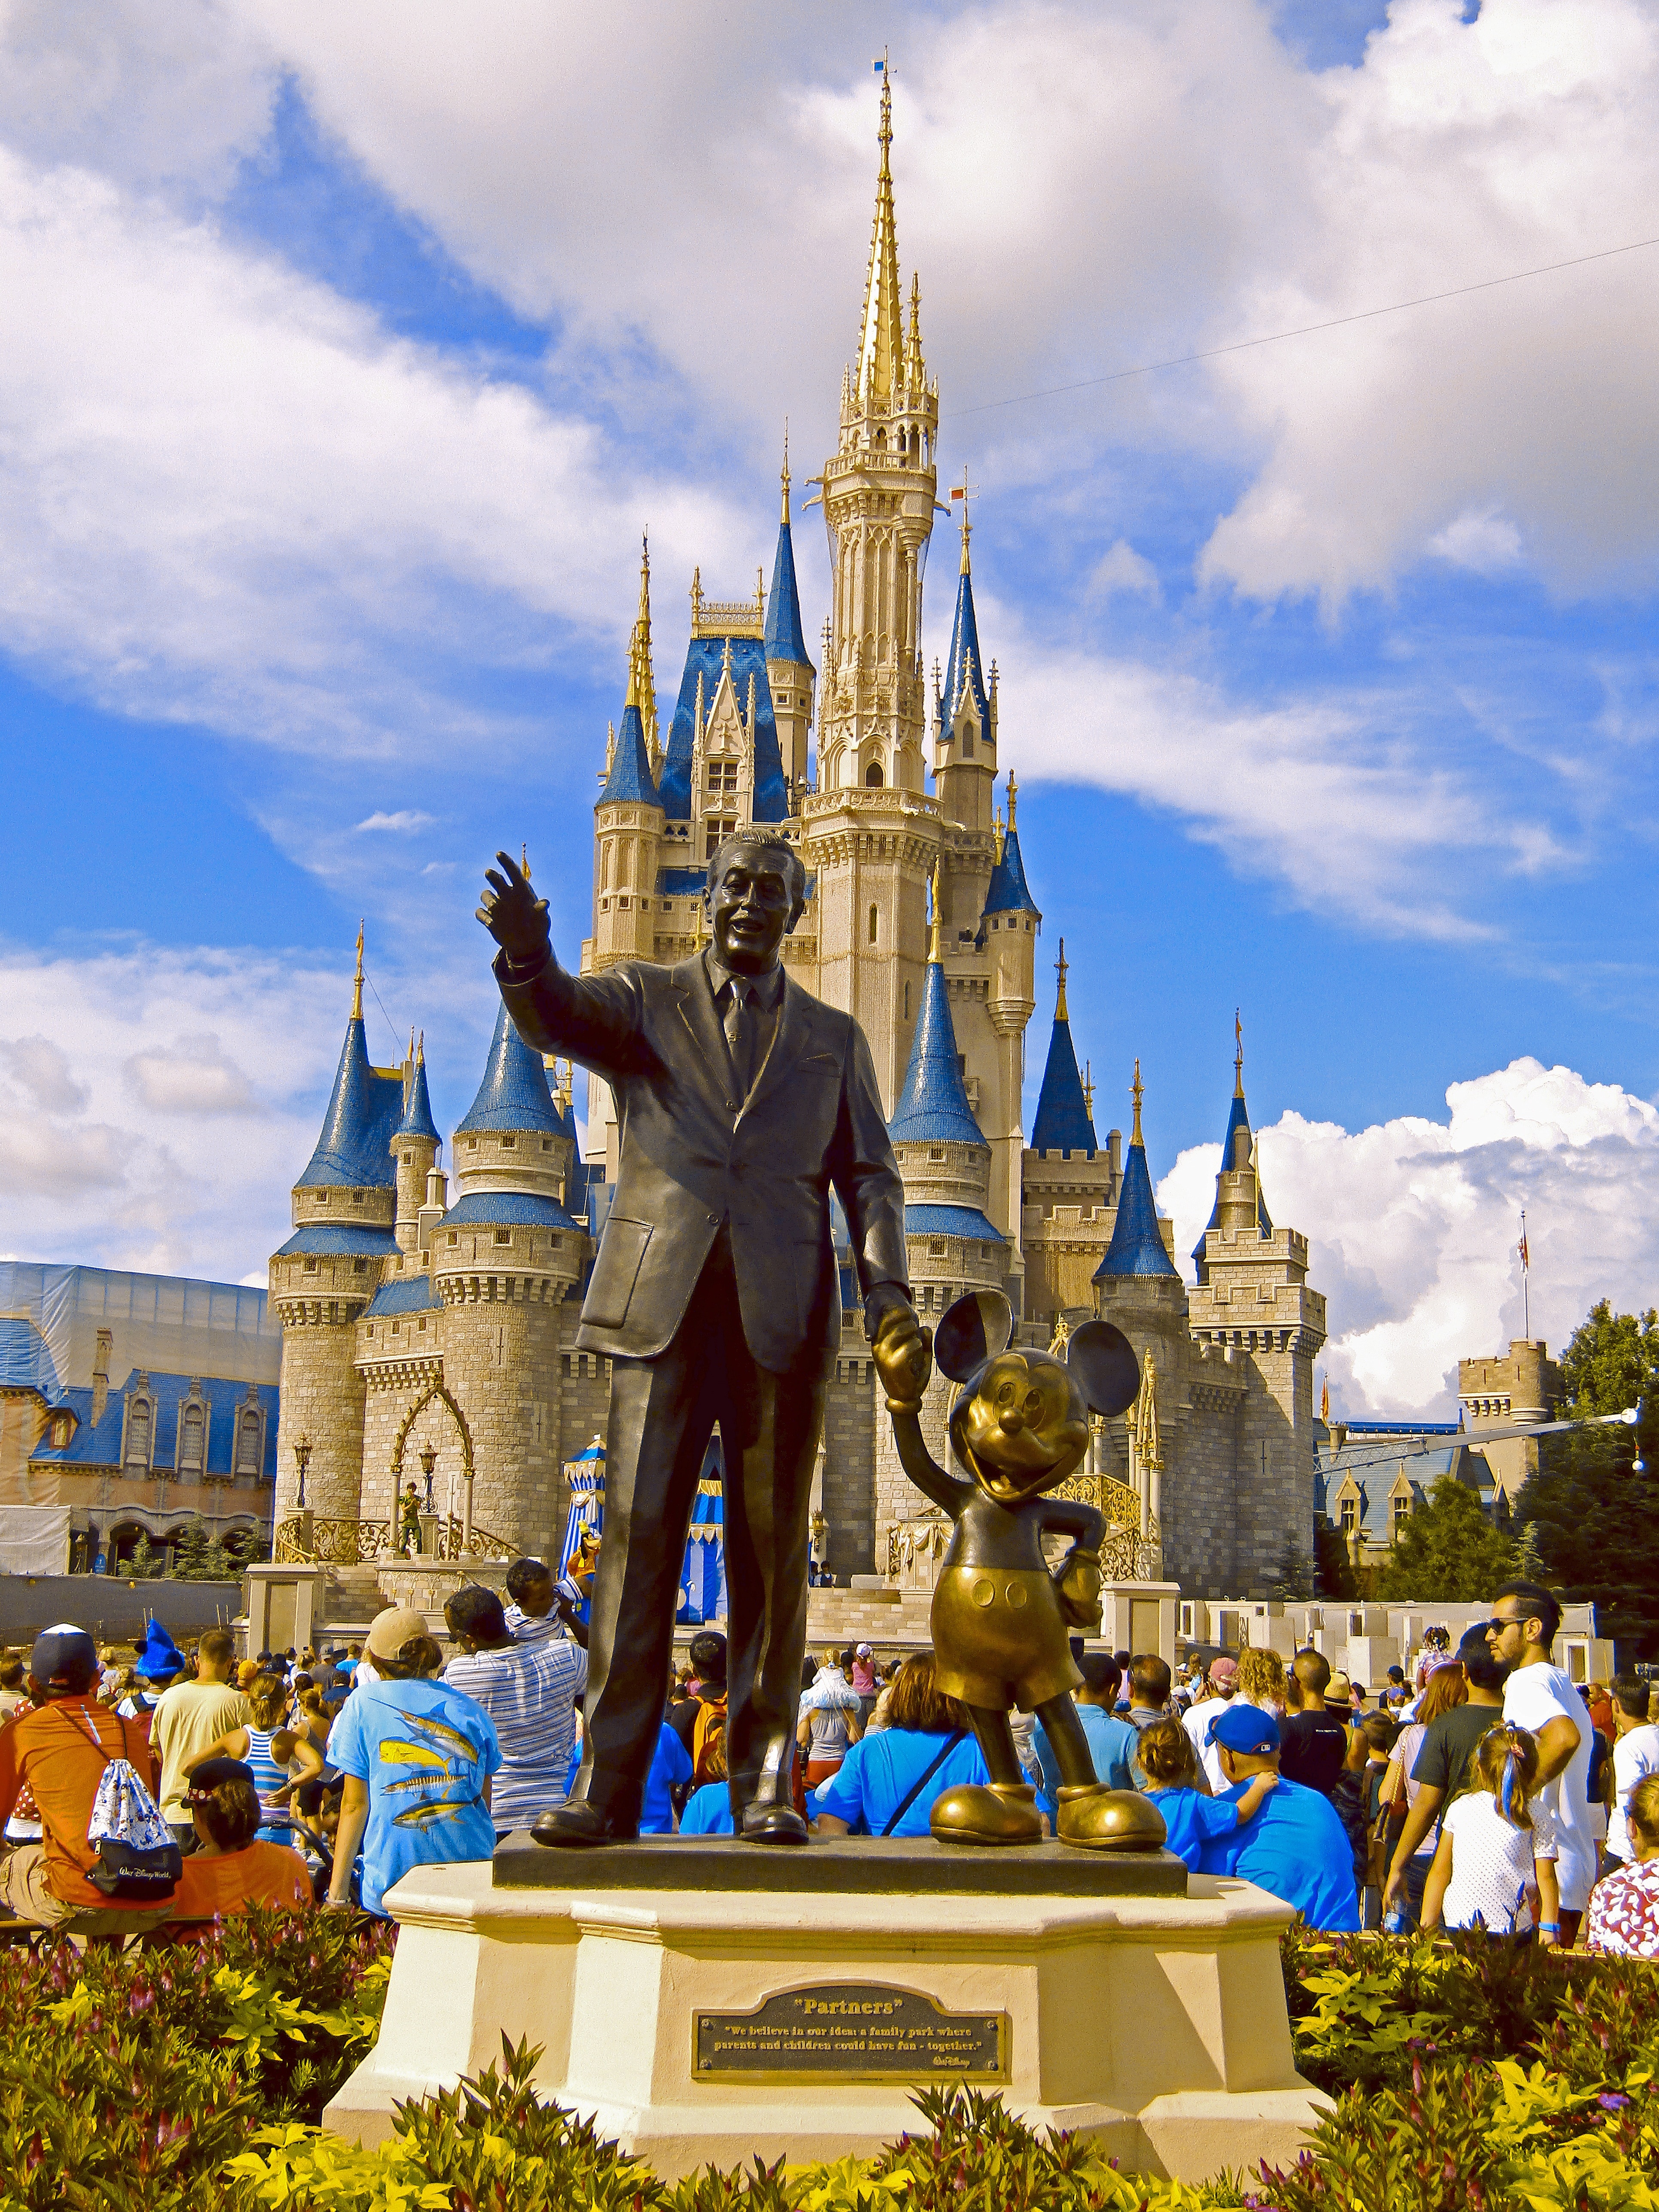 Disney, Kingdom, Magic, Orlando, Florida, statue, architecture